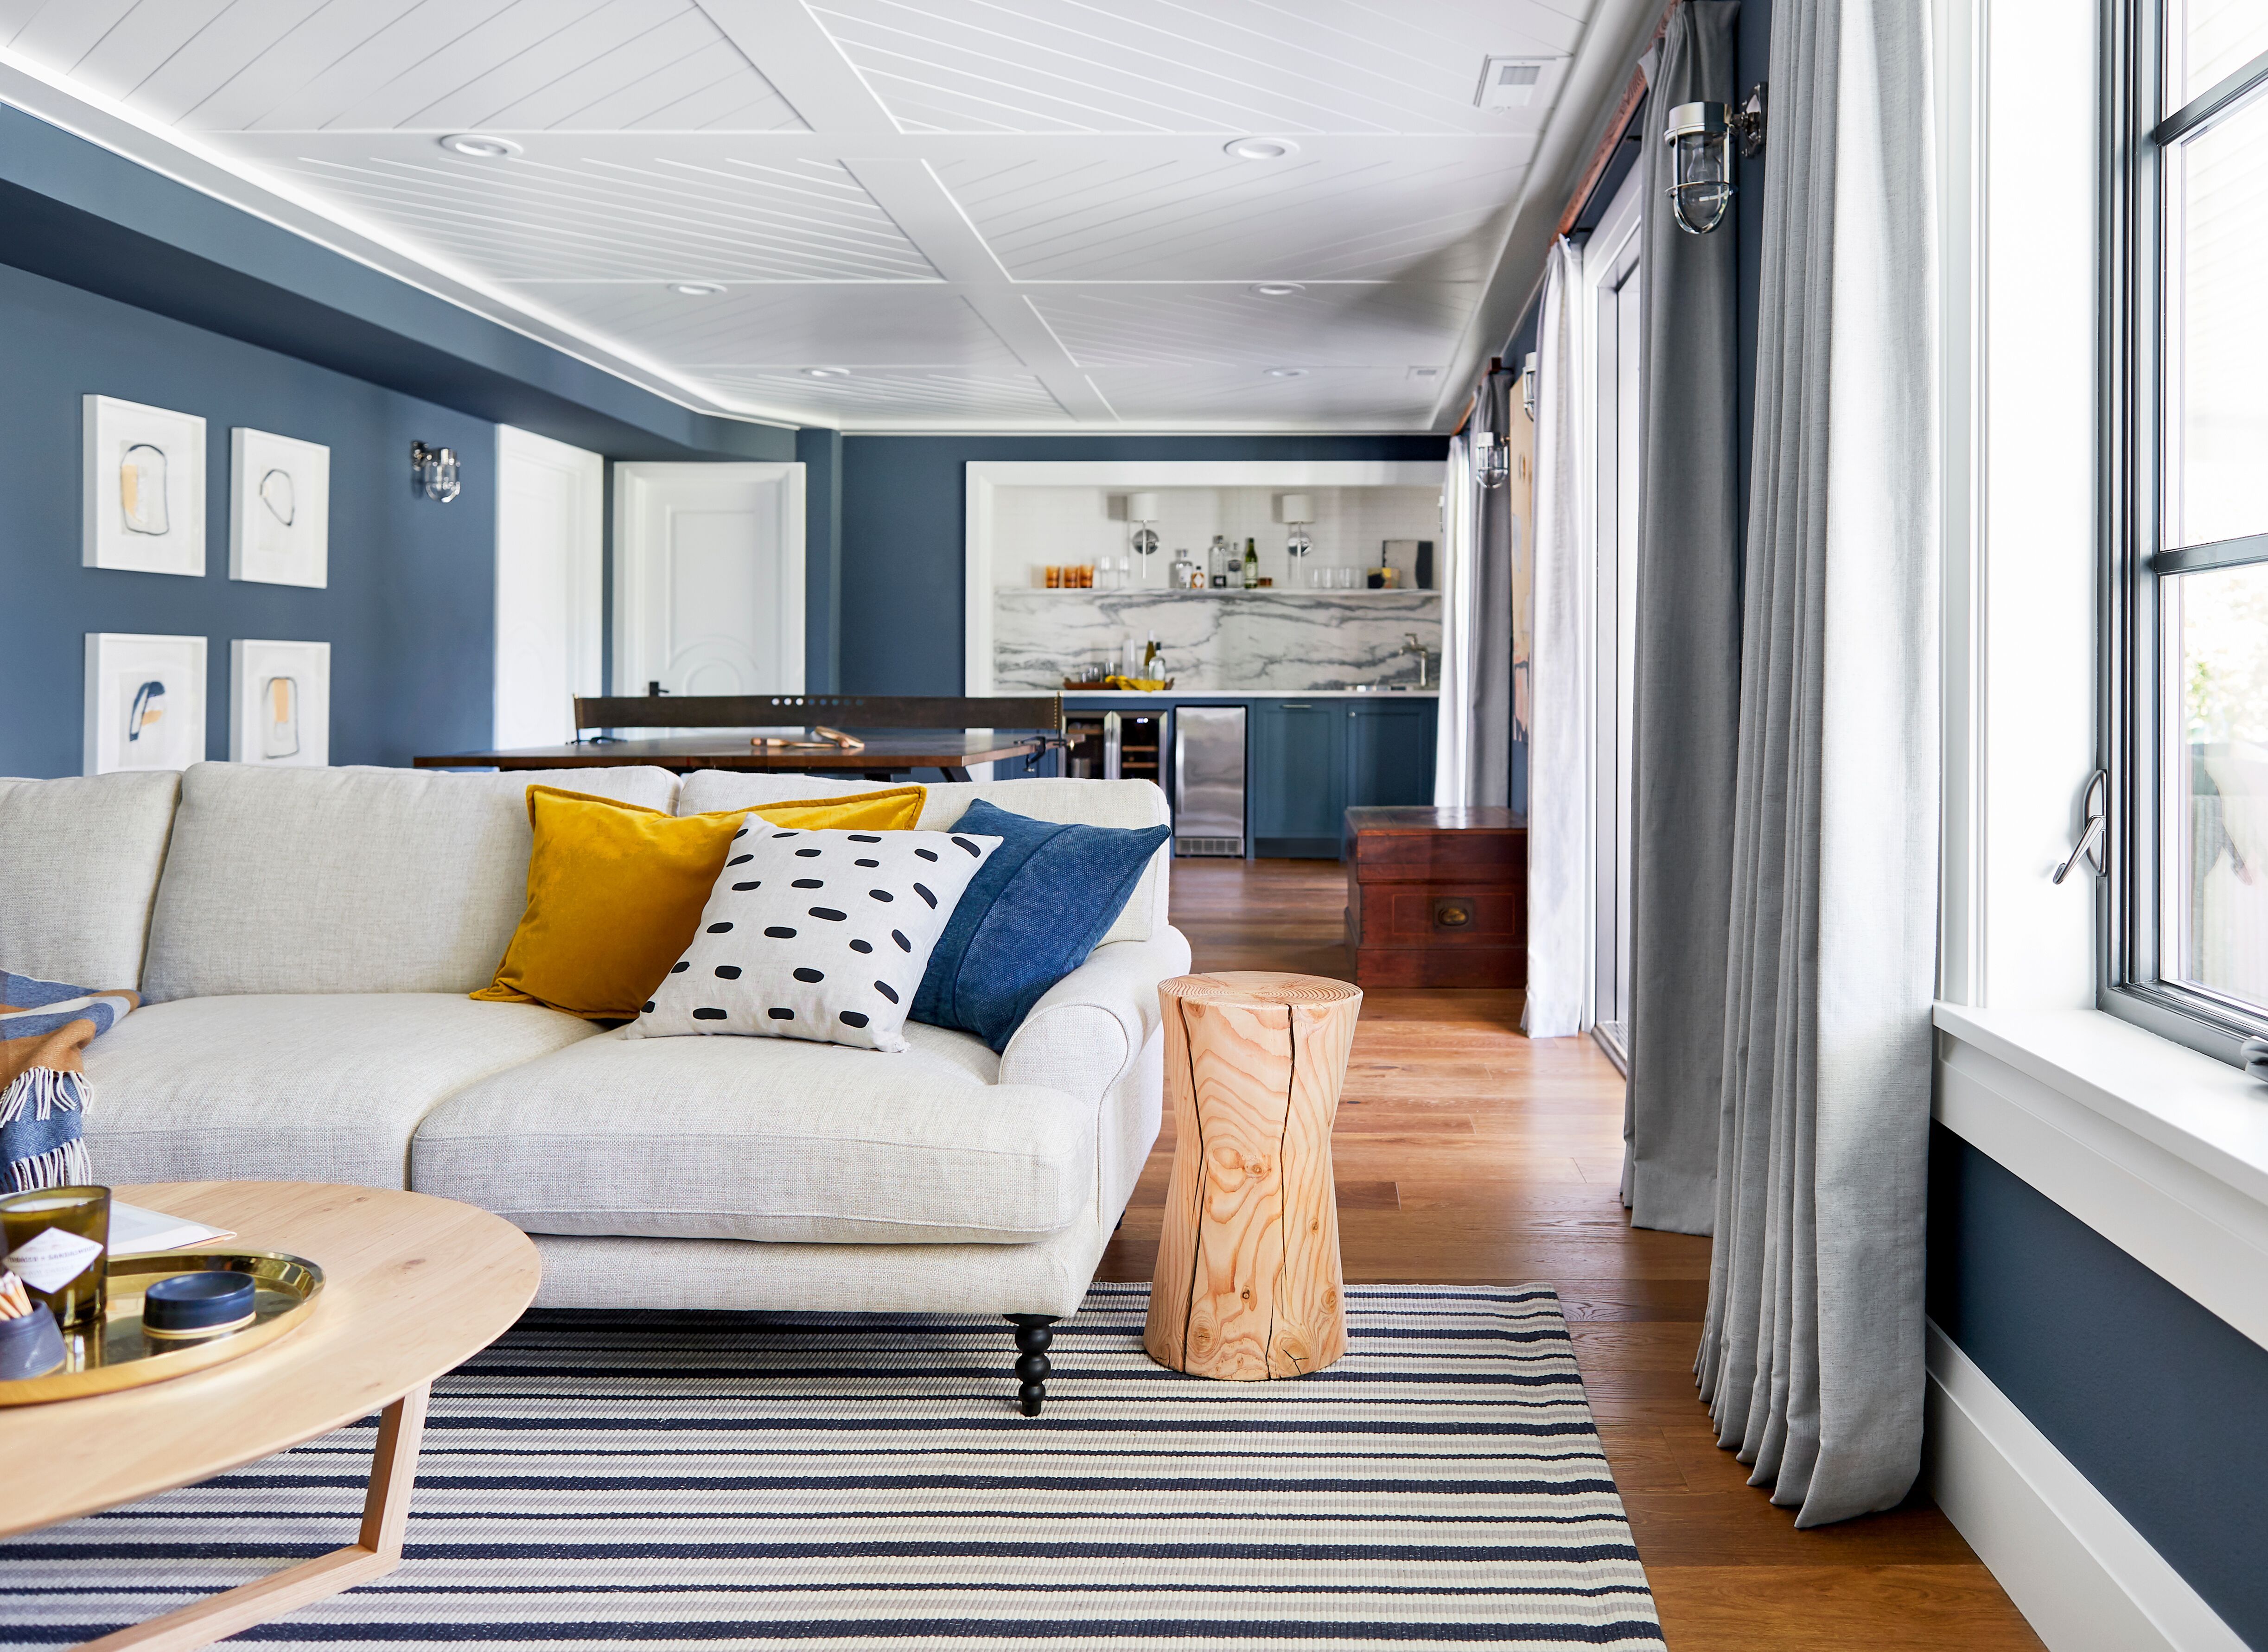 30 stylish family room design ideas - easy decorating tips